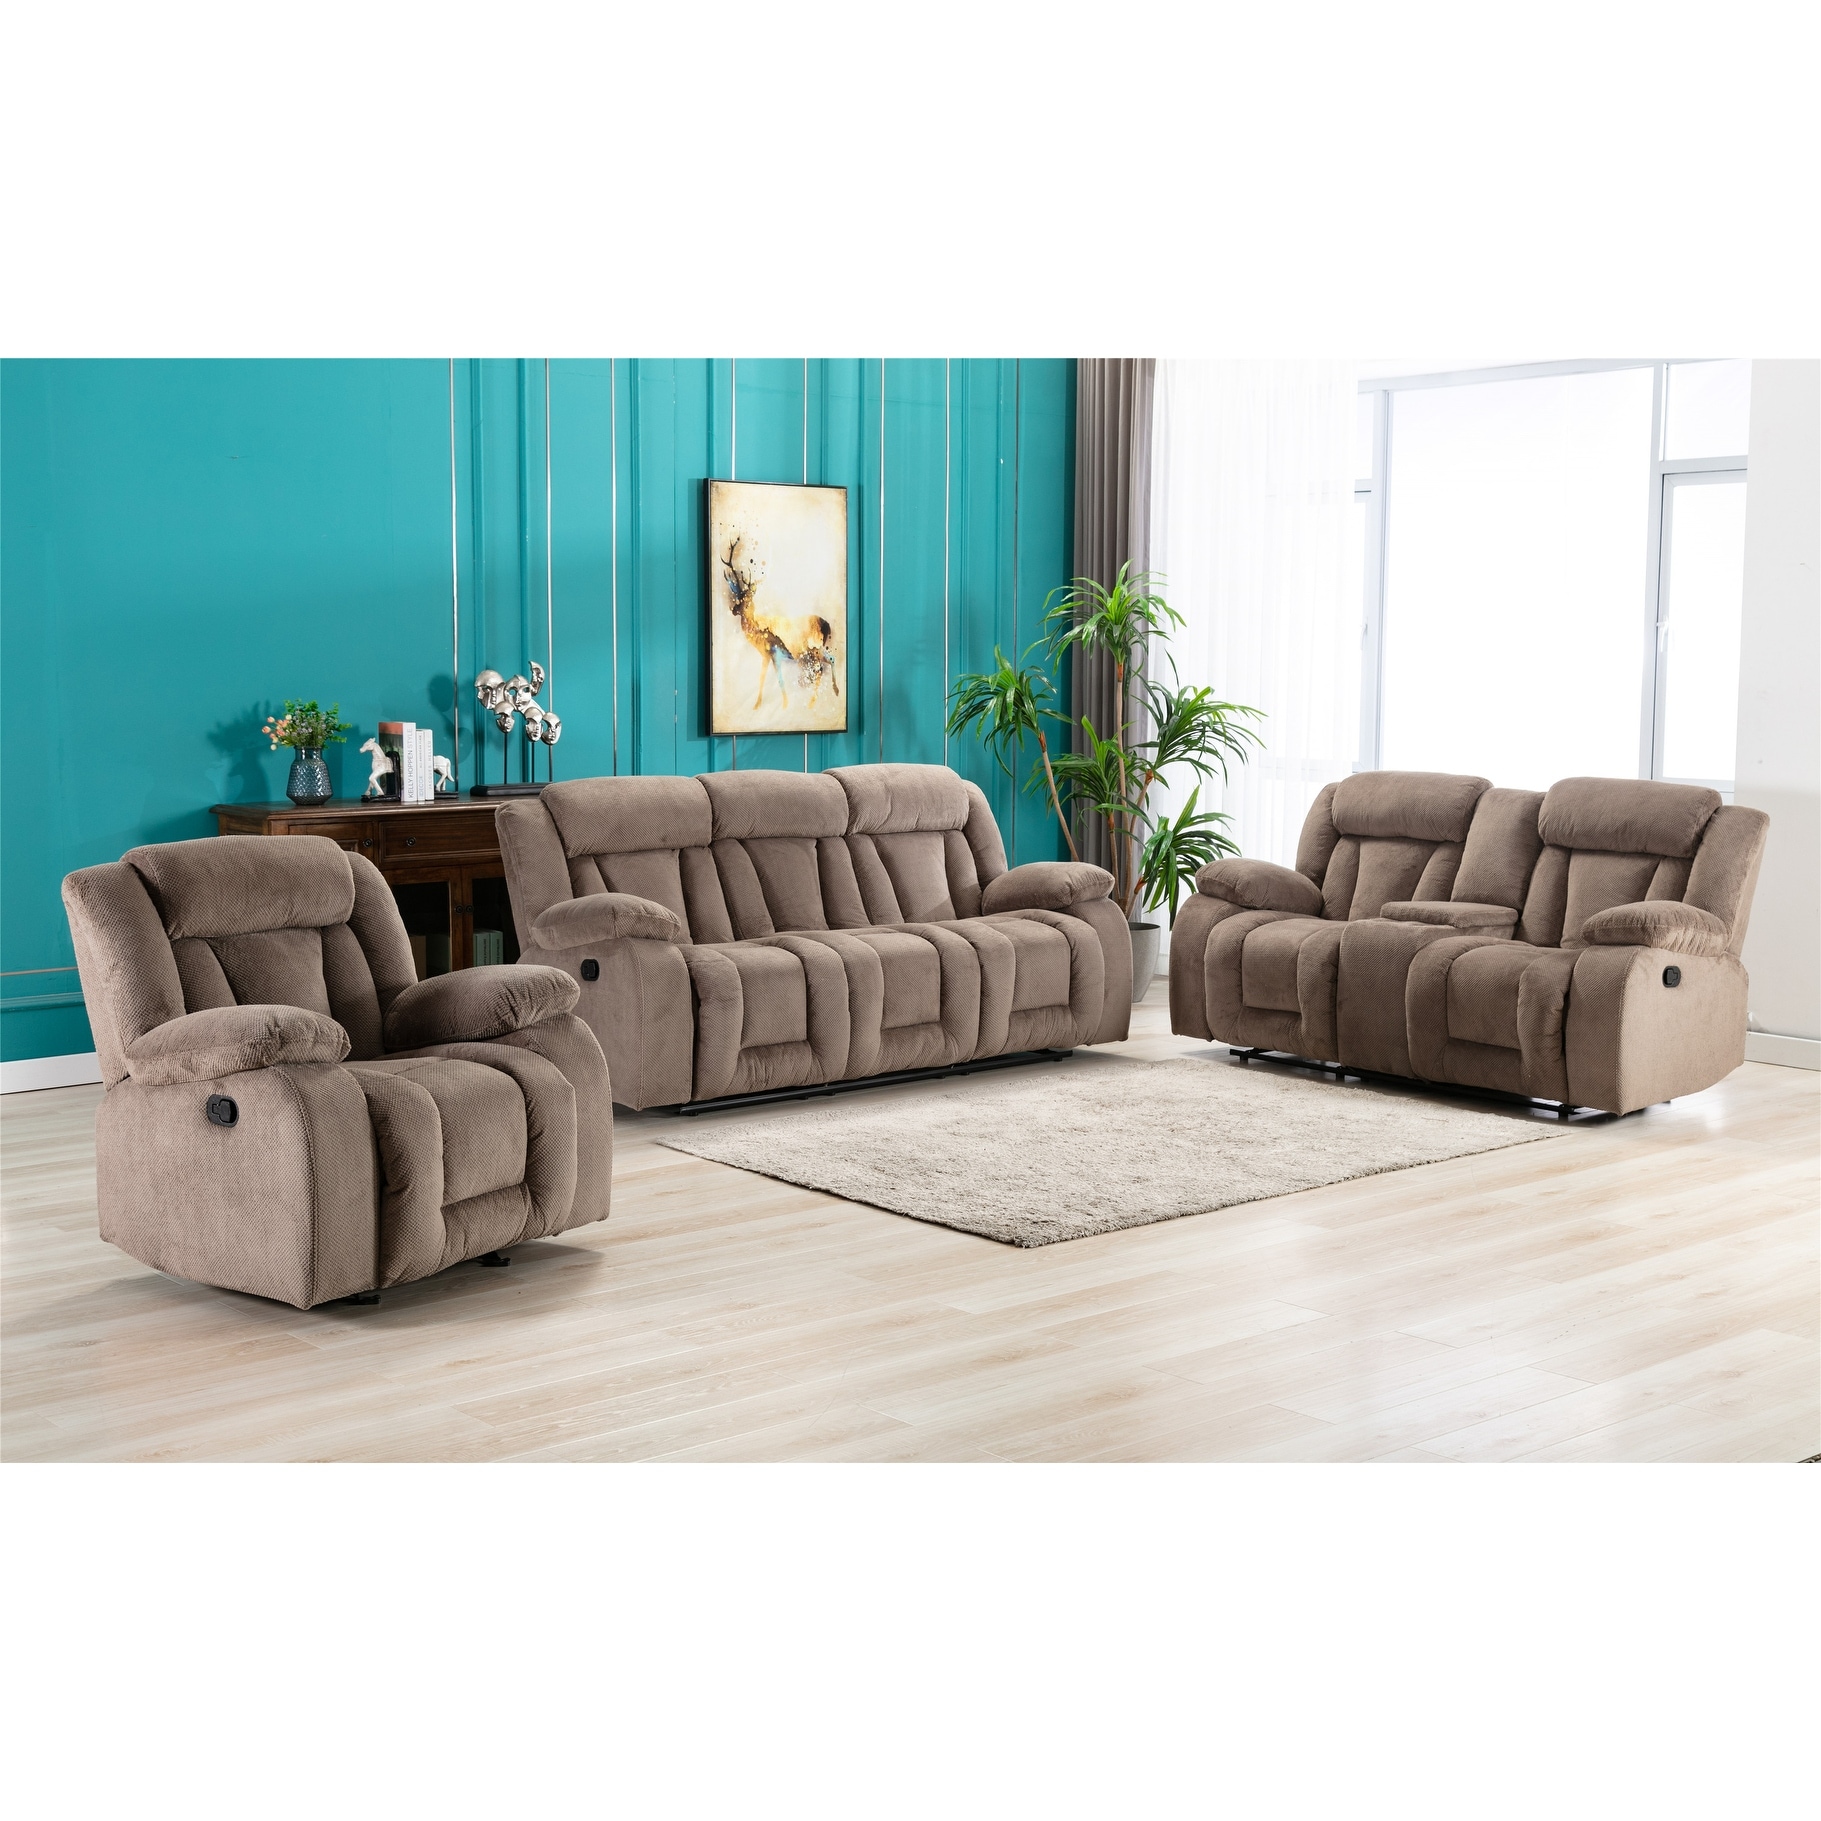 Fabric Overstuffed Heavy Duty Recliner Sofa On Sale Overstock 32621073